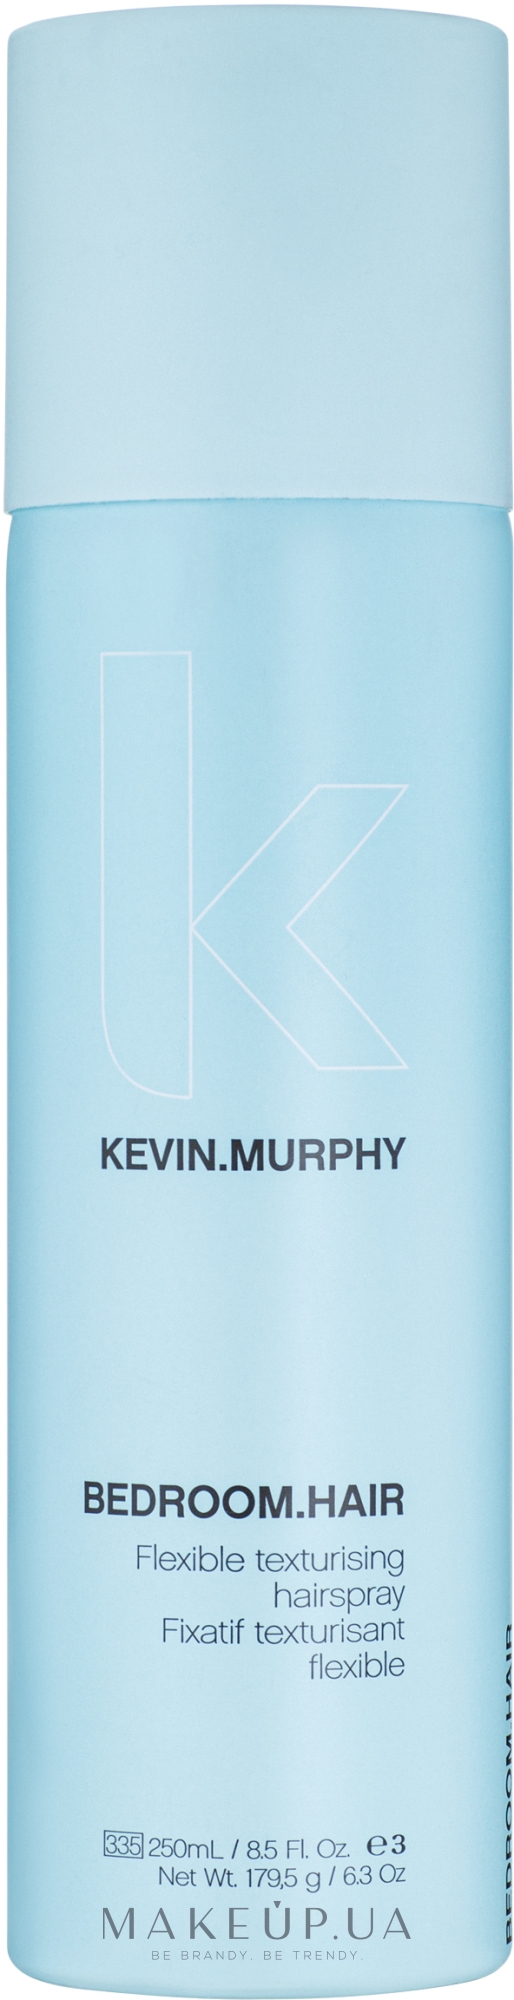 Текстурирующий спрей для волос - Kevin.Murphy Bedroom.Hair Flexible Texturising Hairspray — фото 250ml